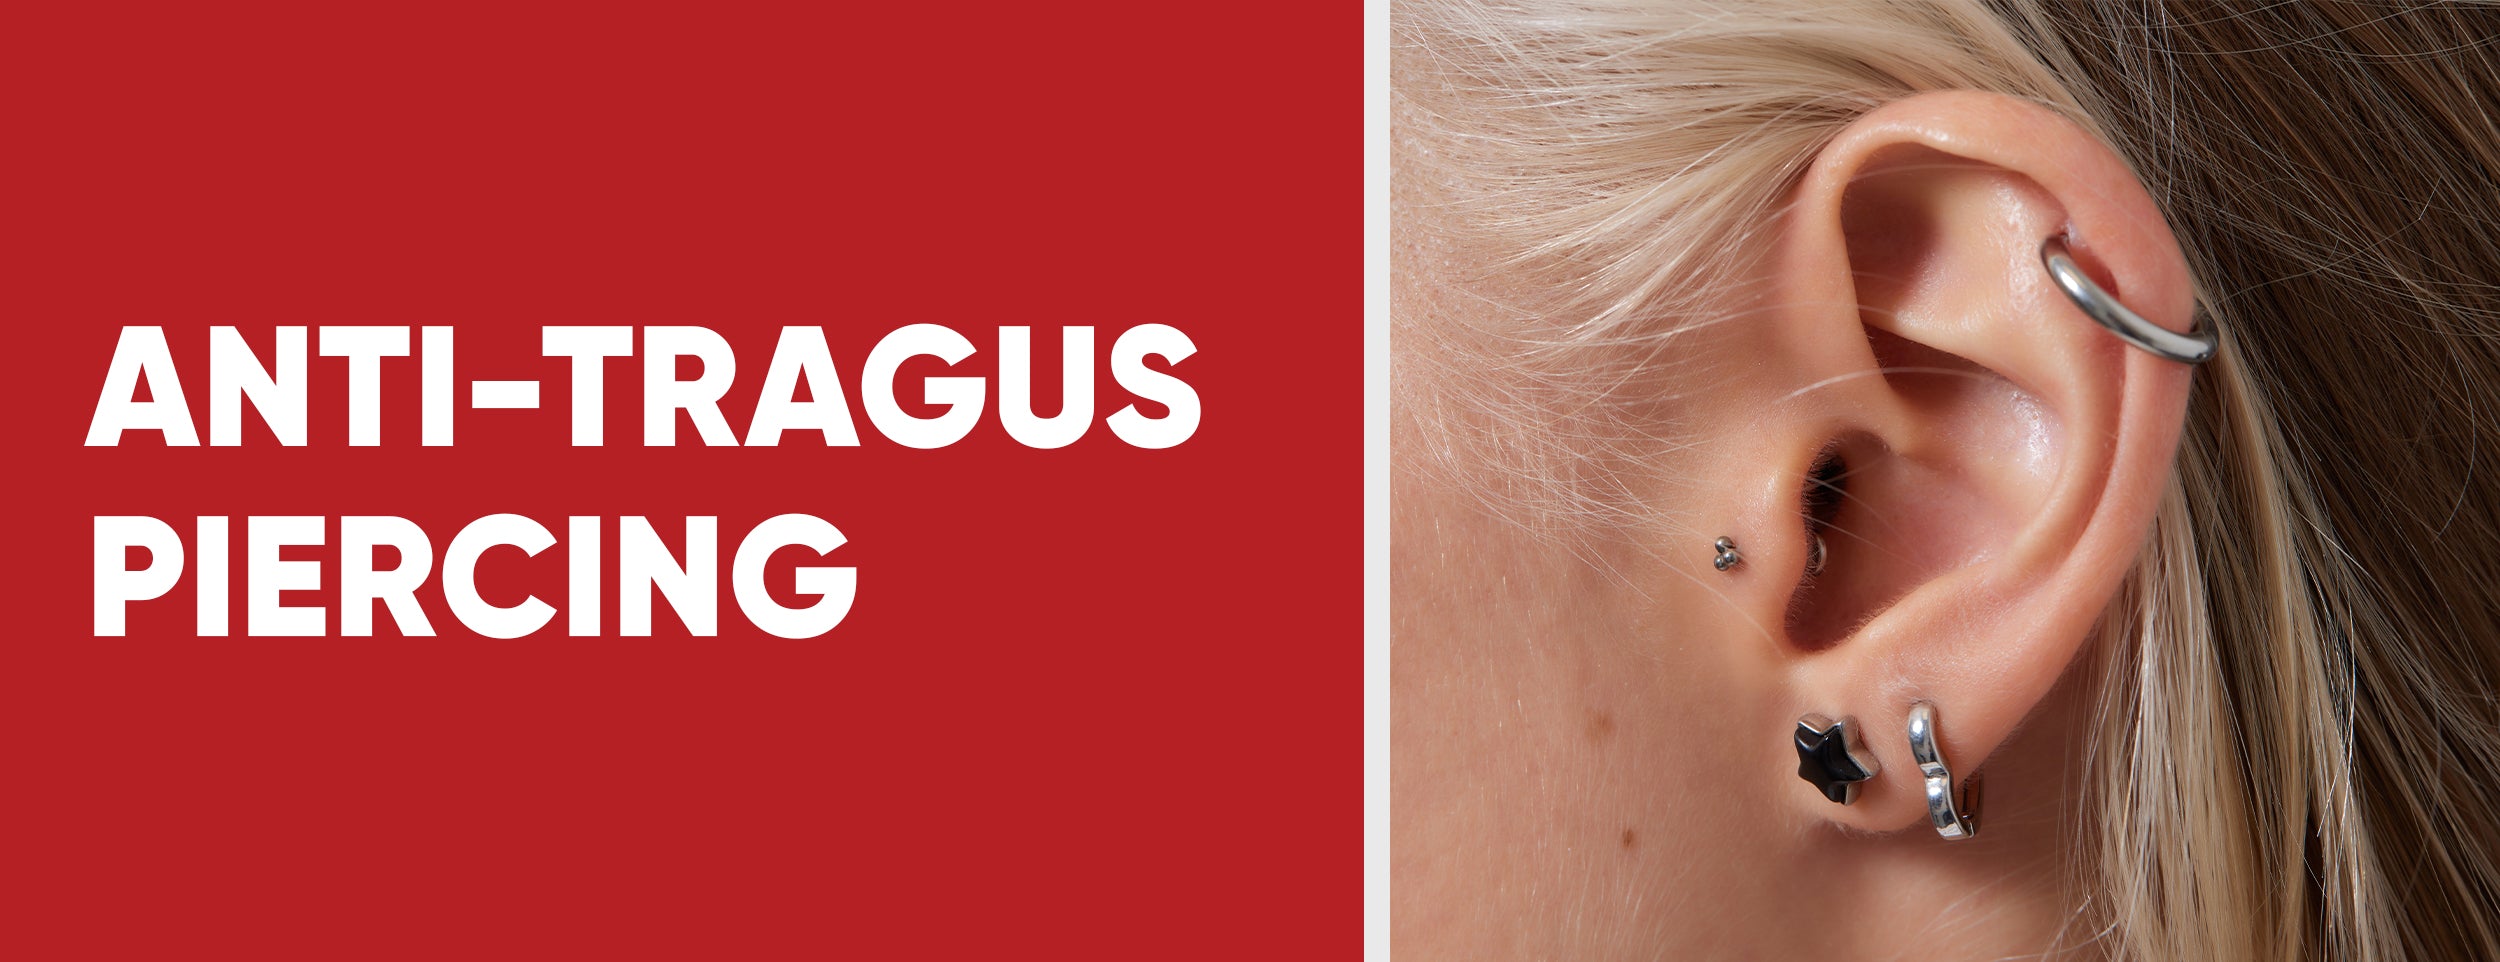 Anti-Tragus Piercing